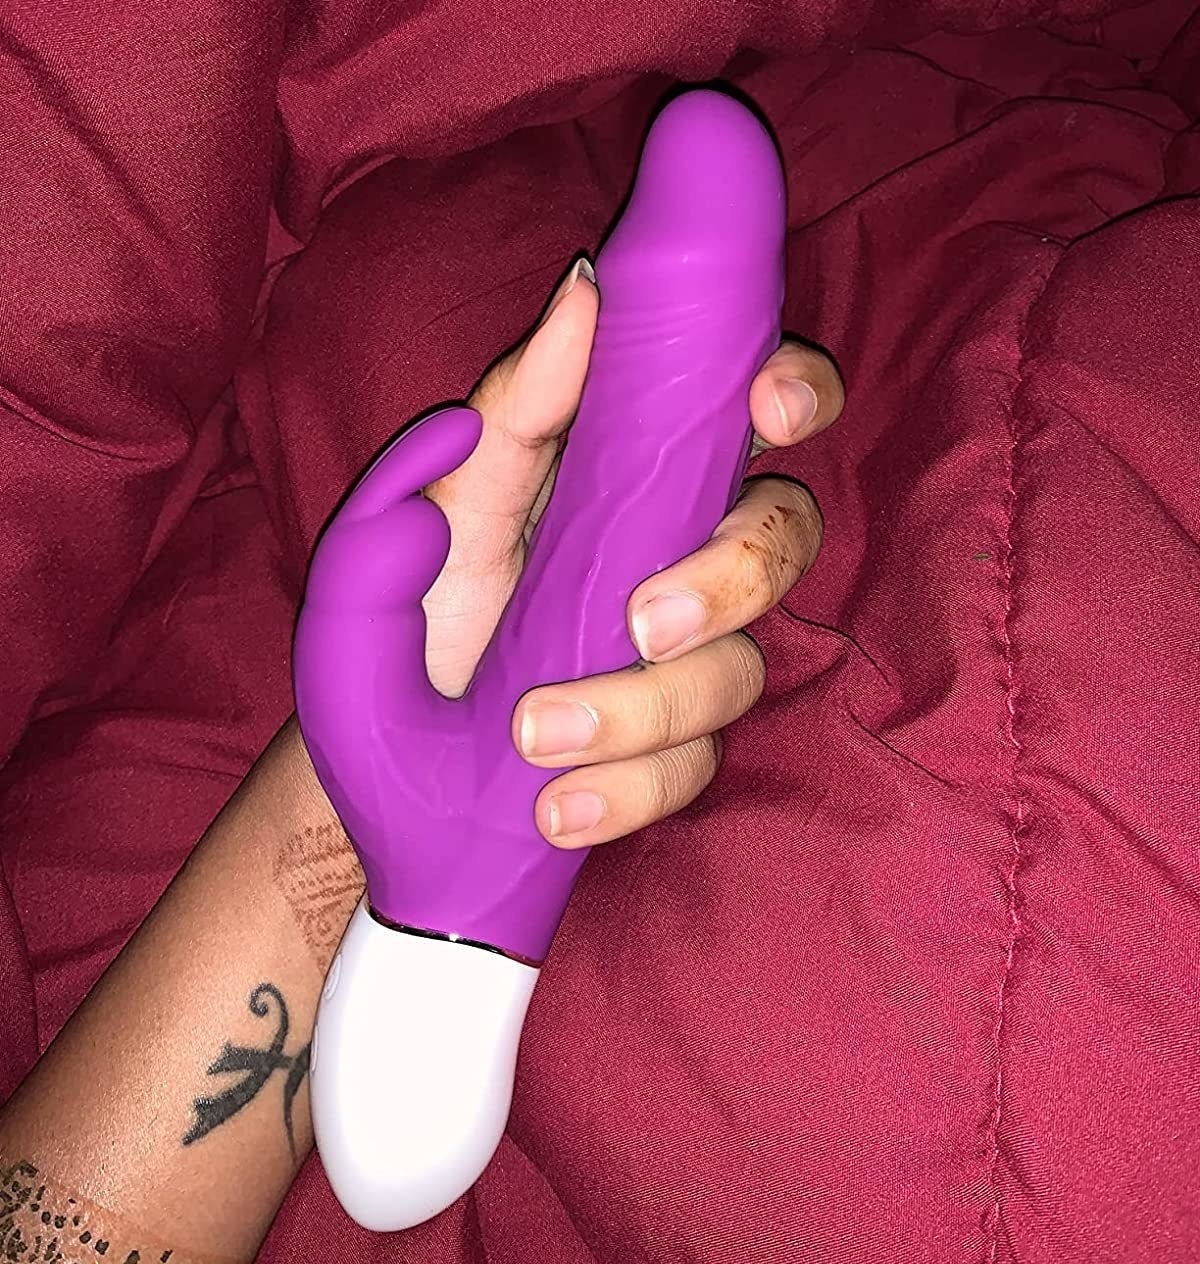 Reviewer holding purple rabbit vibrator